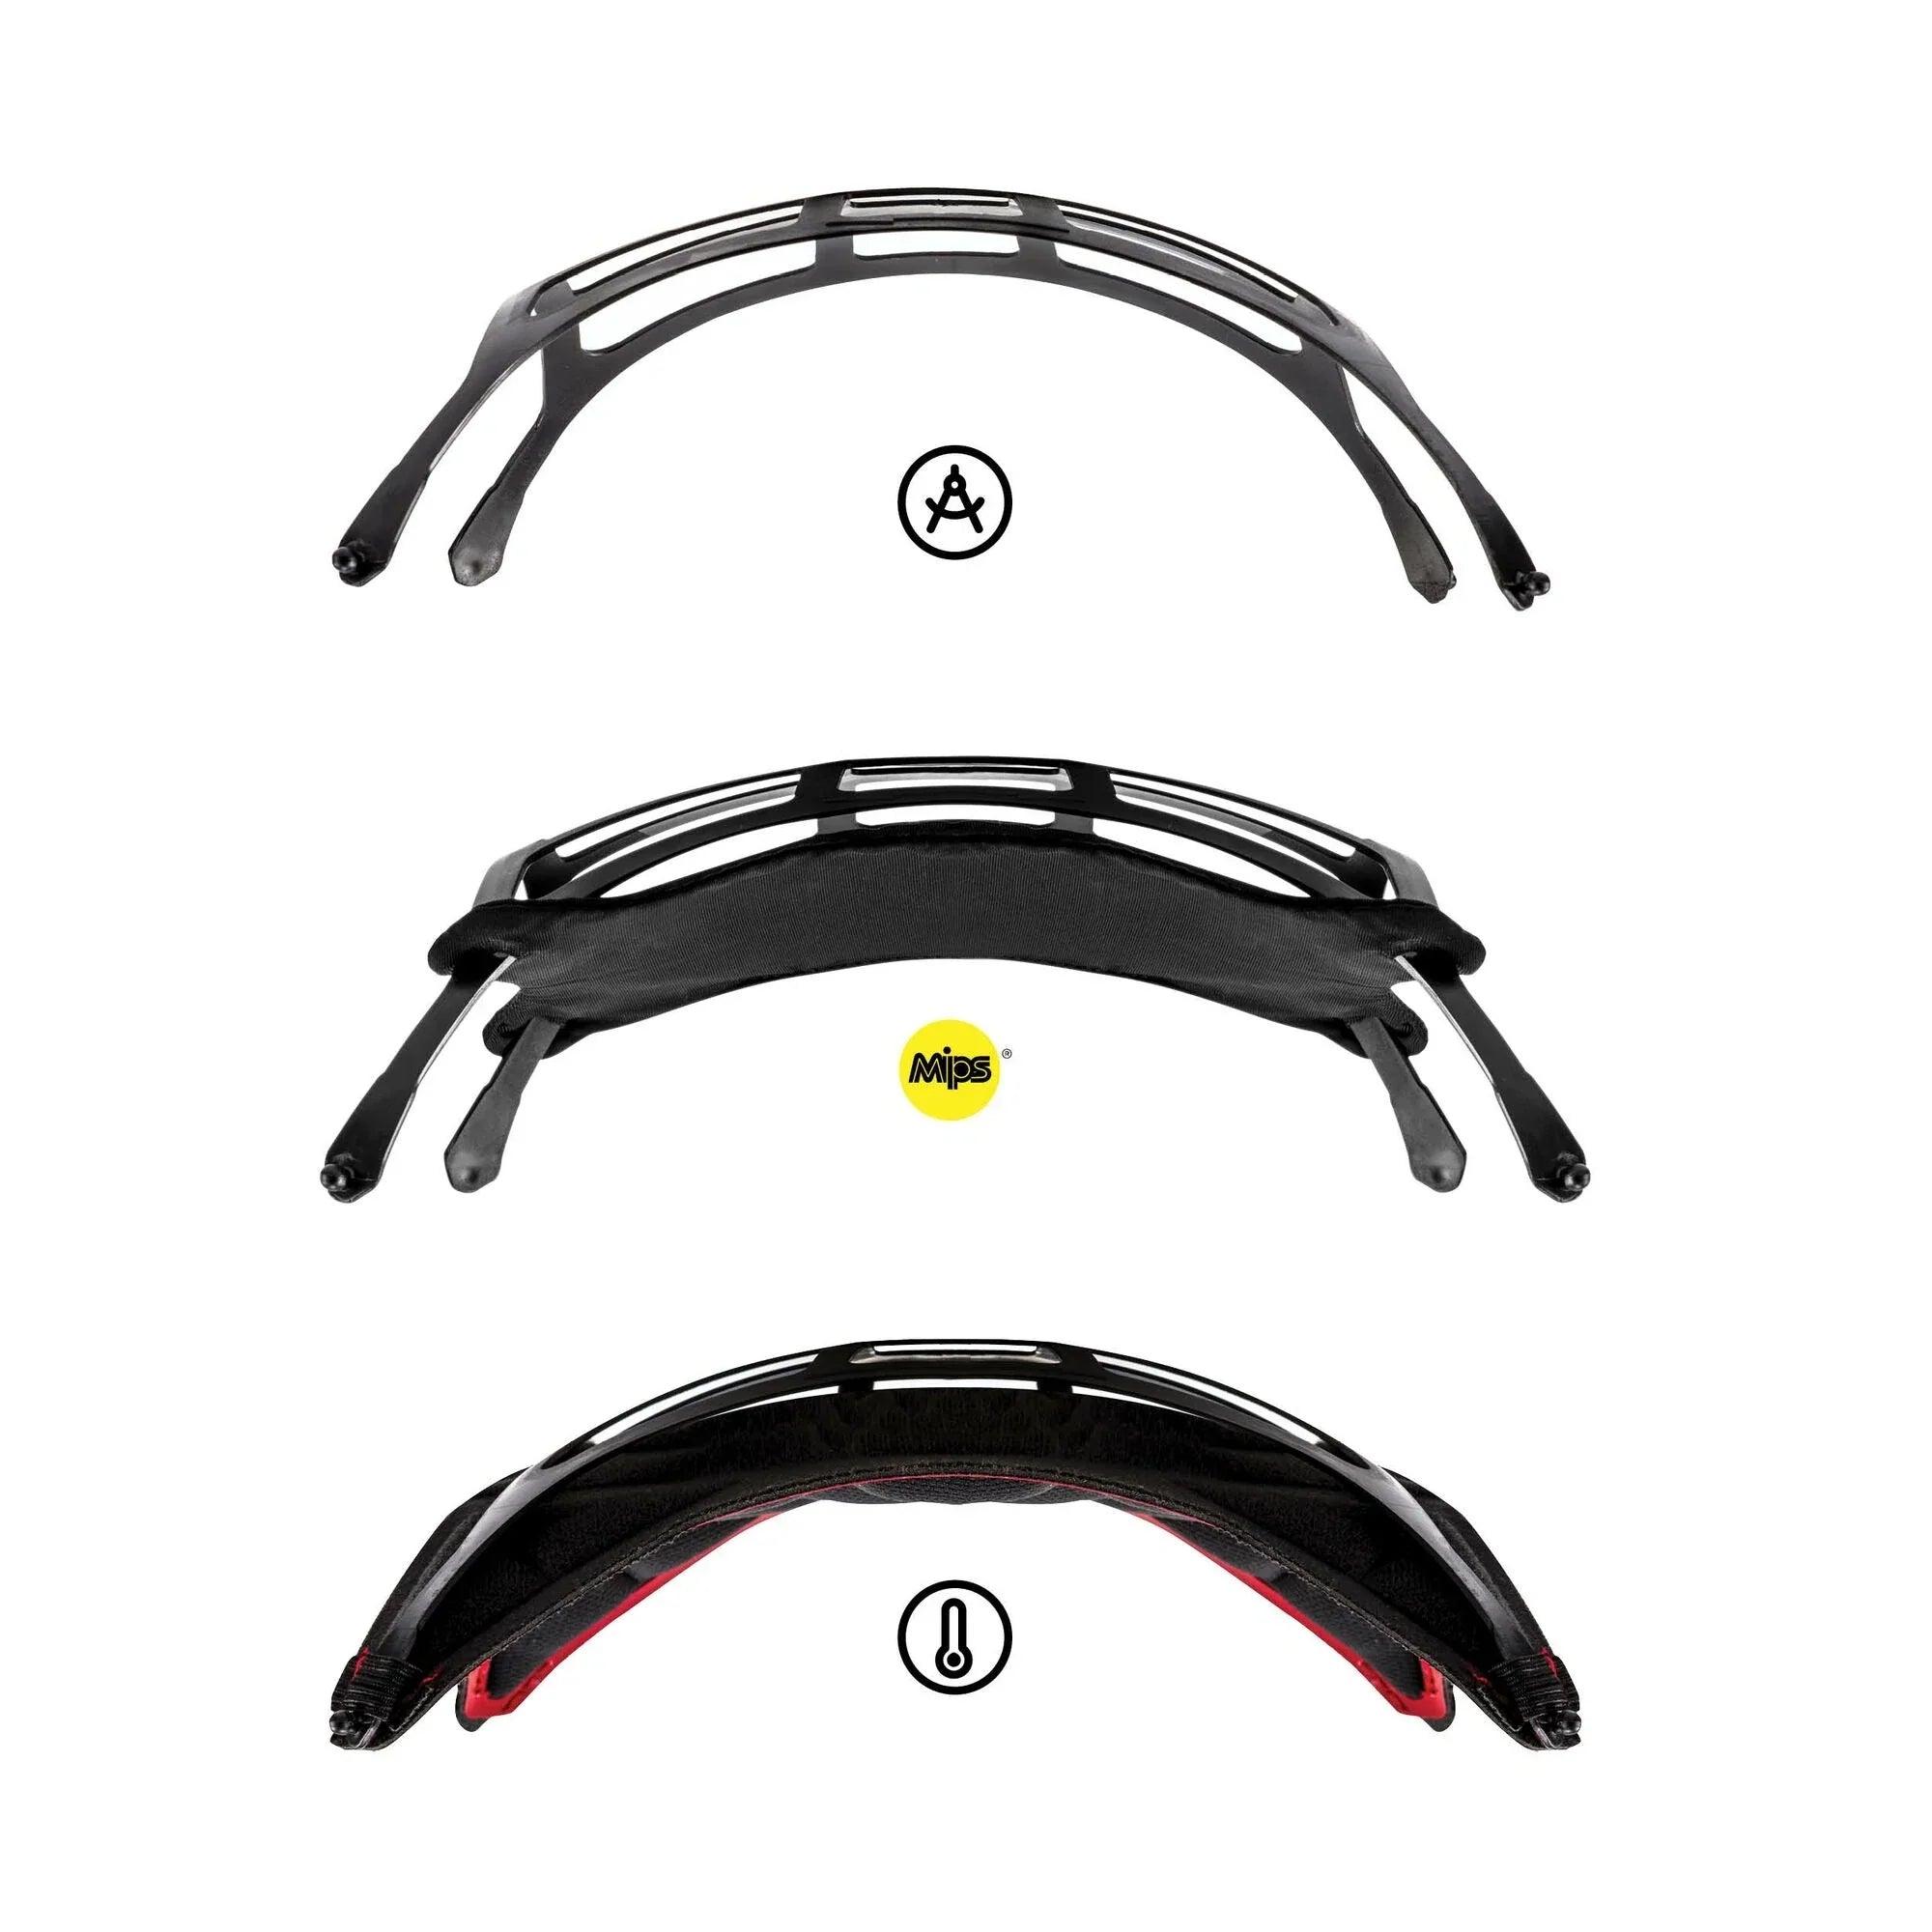 Alpinestars Supertech M8 Triple Silver/Black/Yellow Fluorescent Helmet